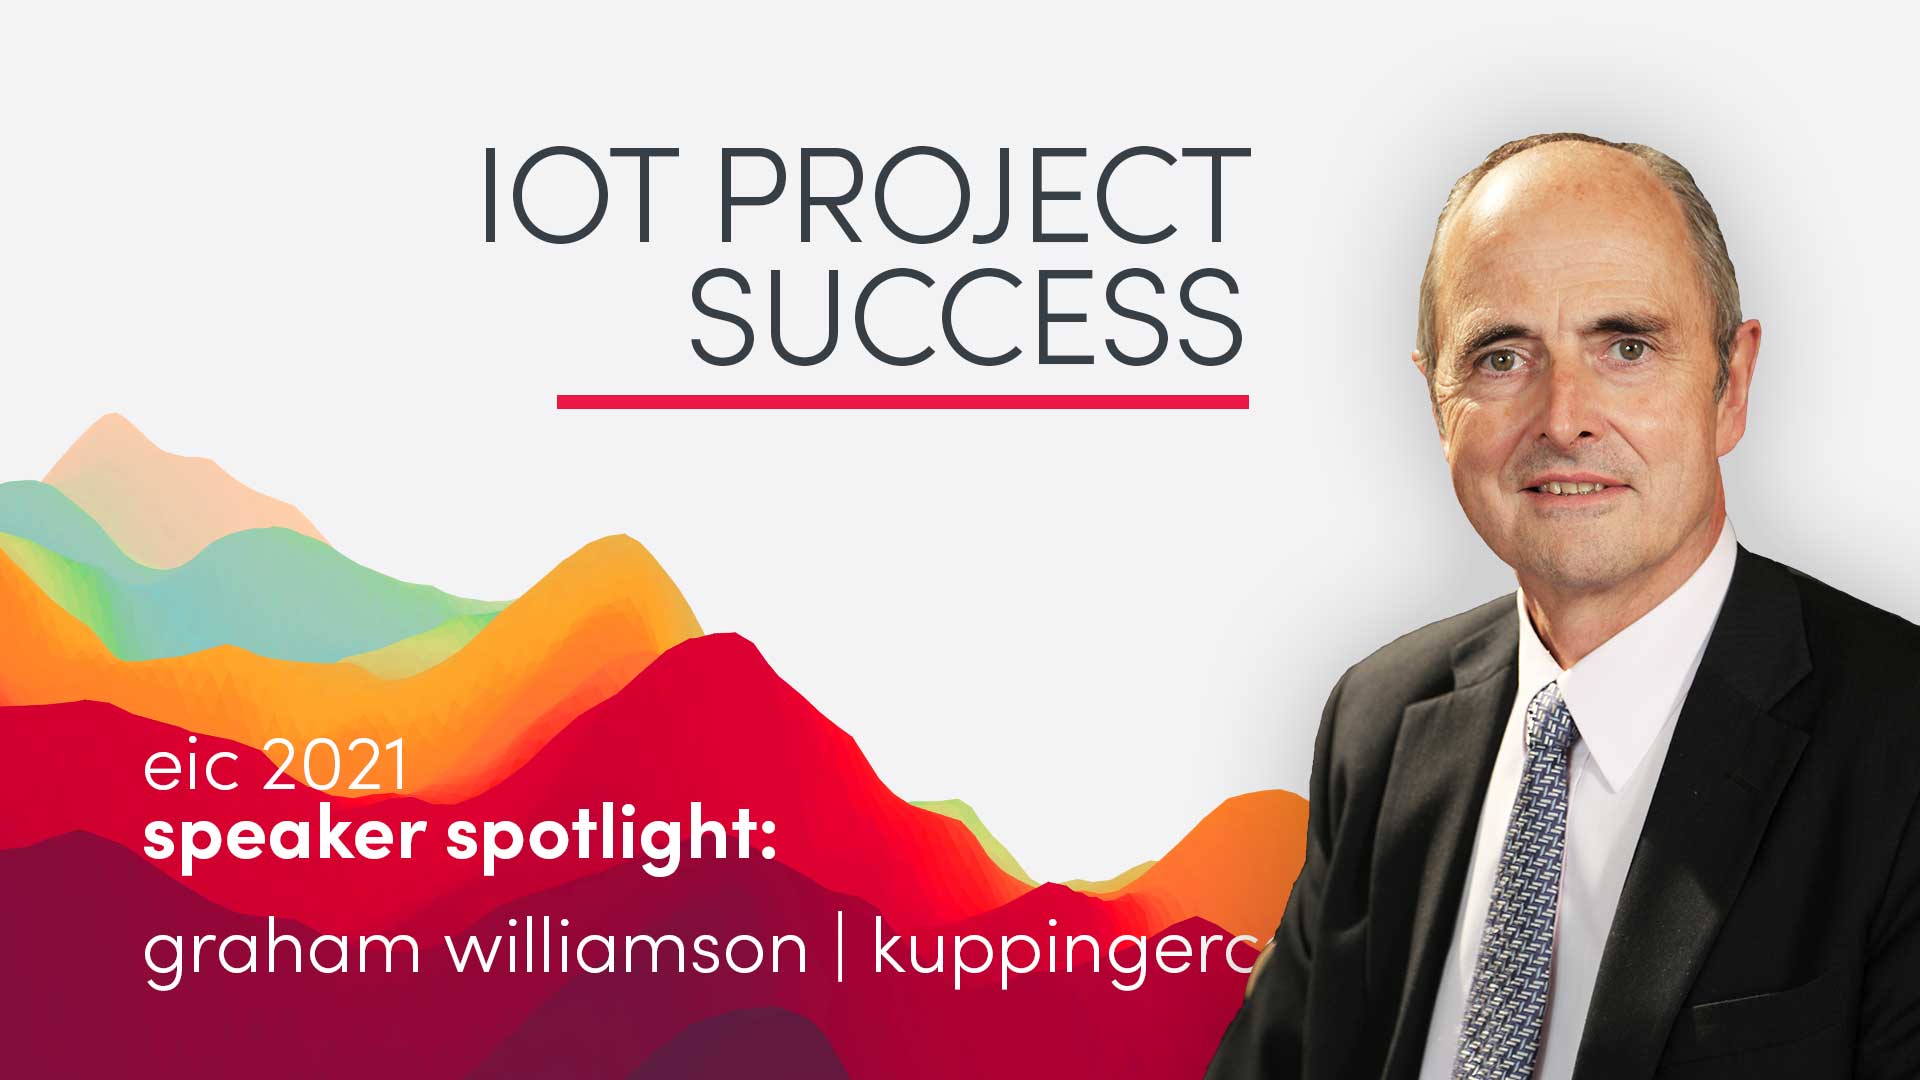 EIC Speaker Spotlight: Graham Williamson on IoT Project Success